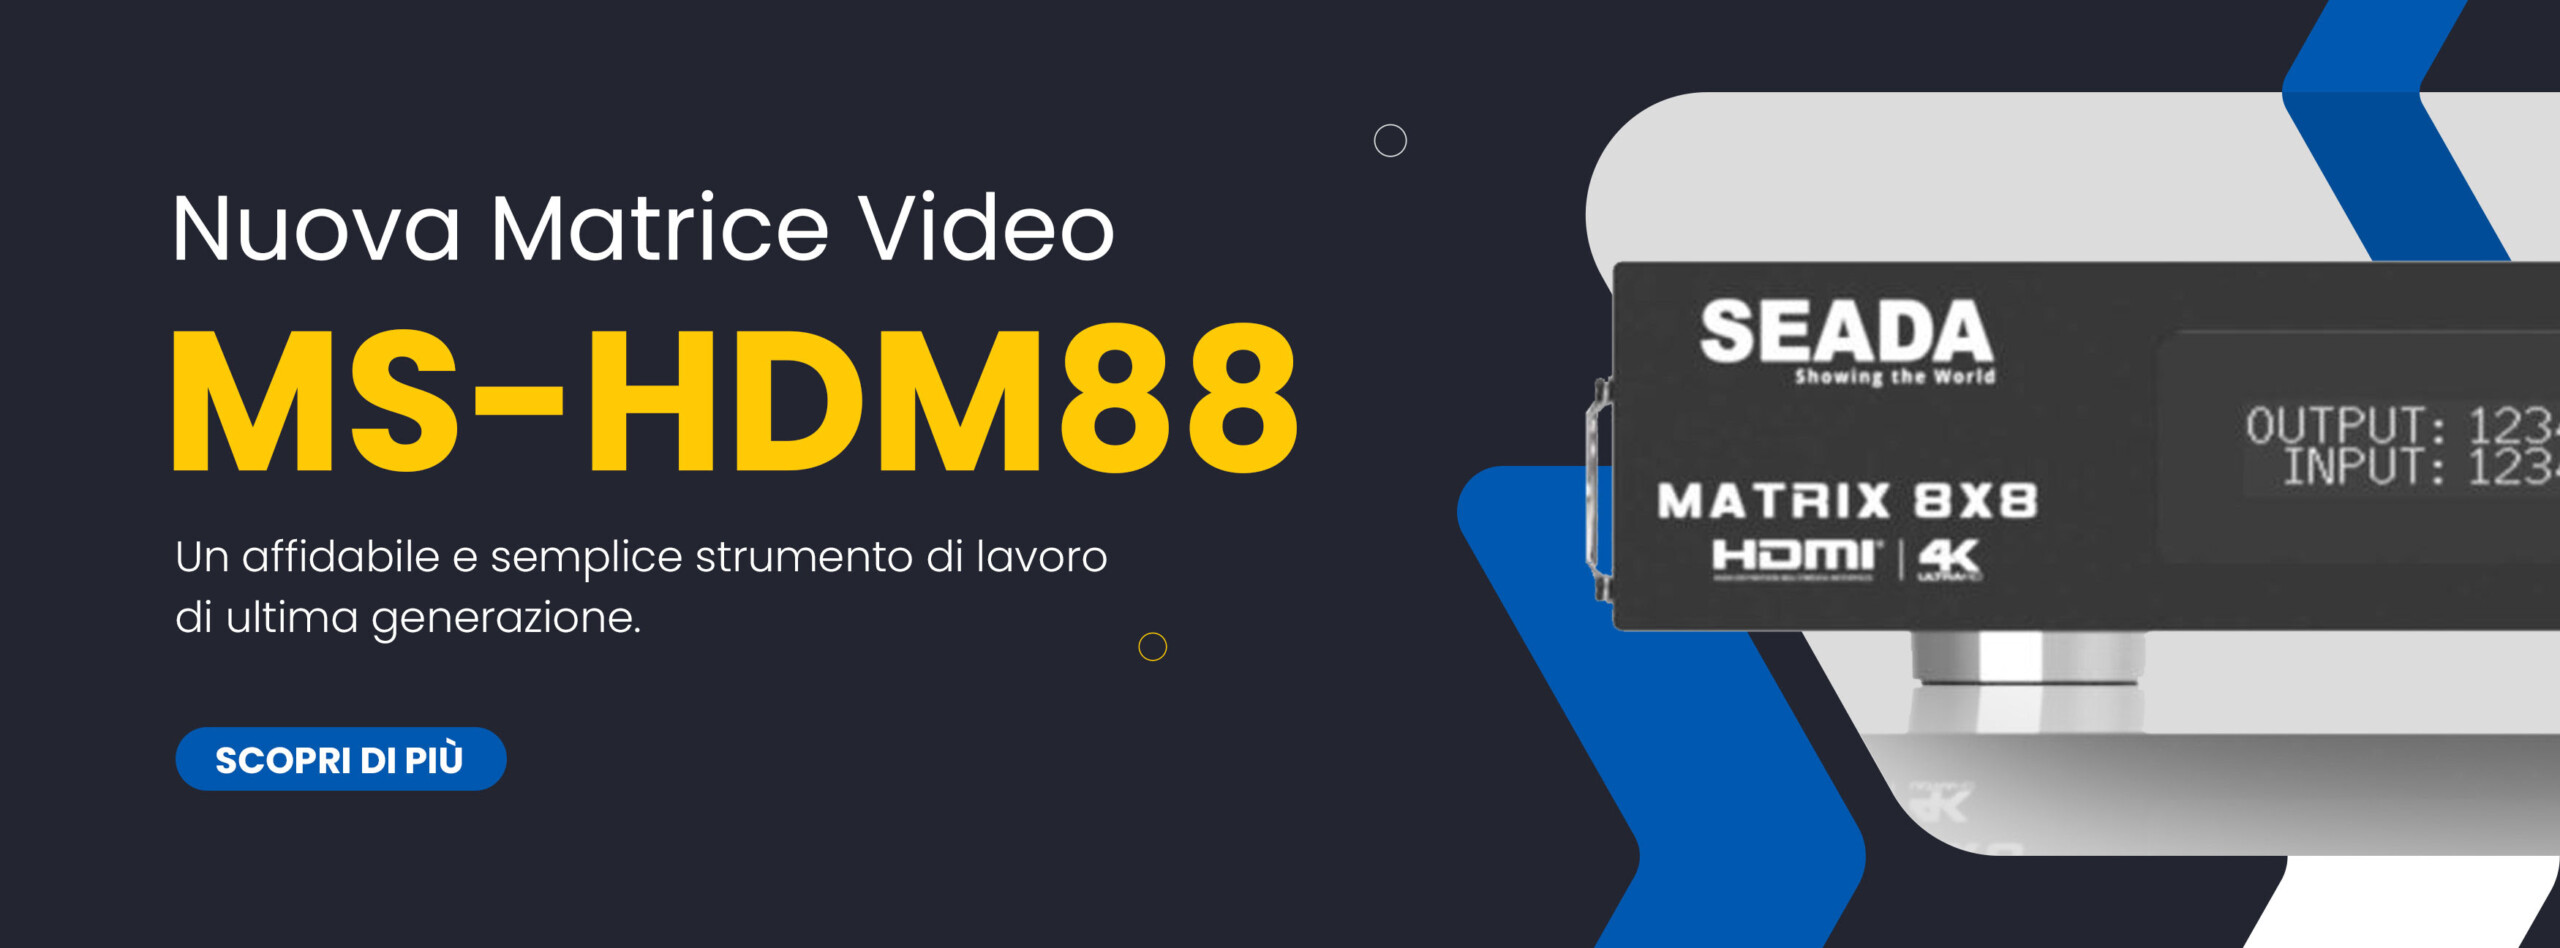 Nuova Matrice Video MS-HDM88 by SEADA